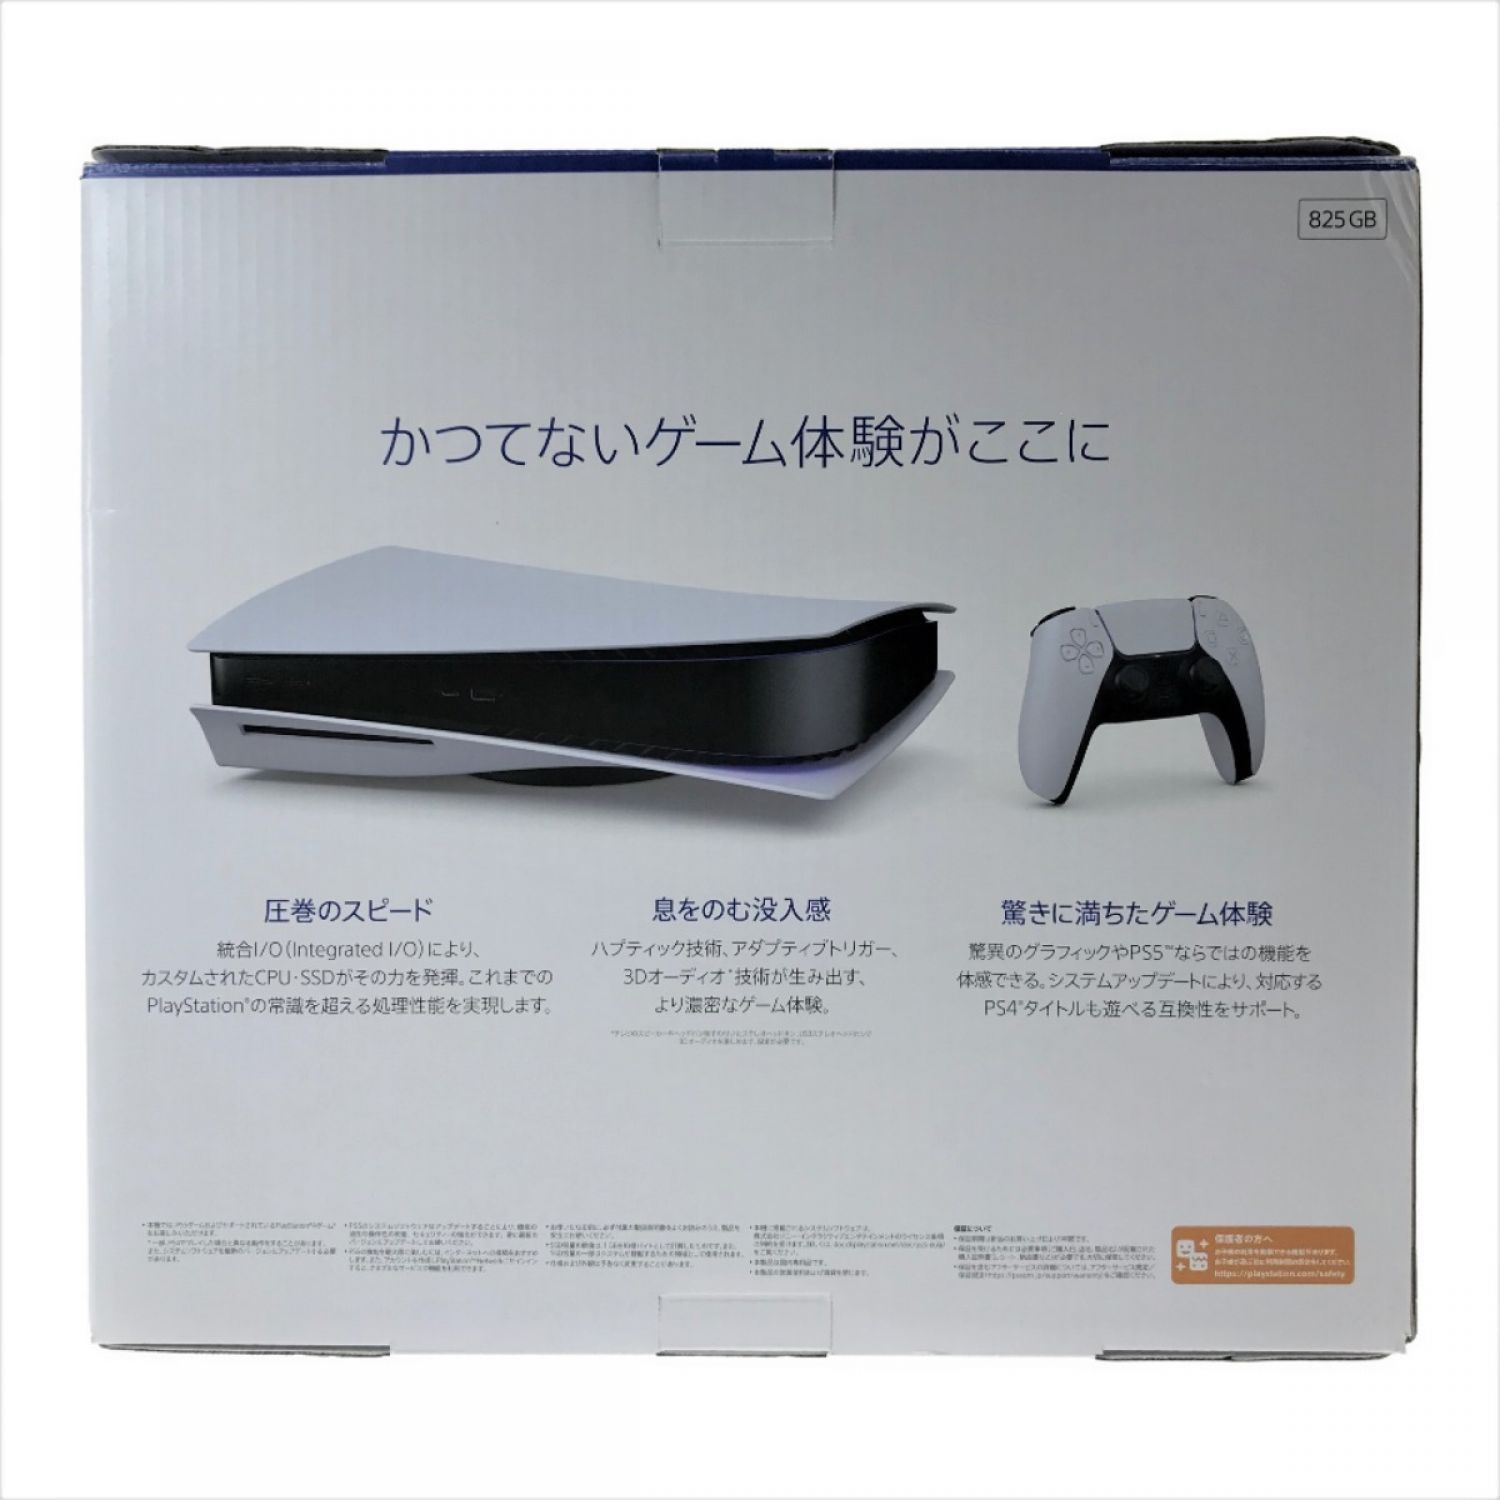 PlayStation5 CFI-1200A01 通常盤